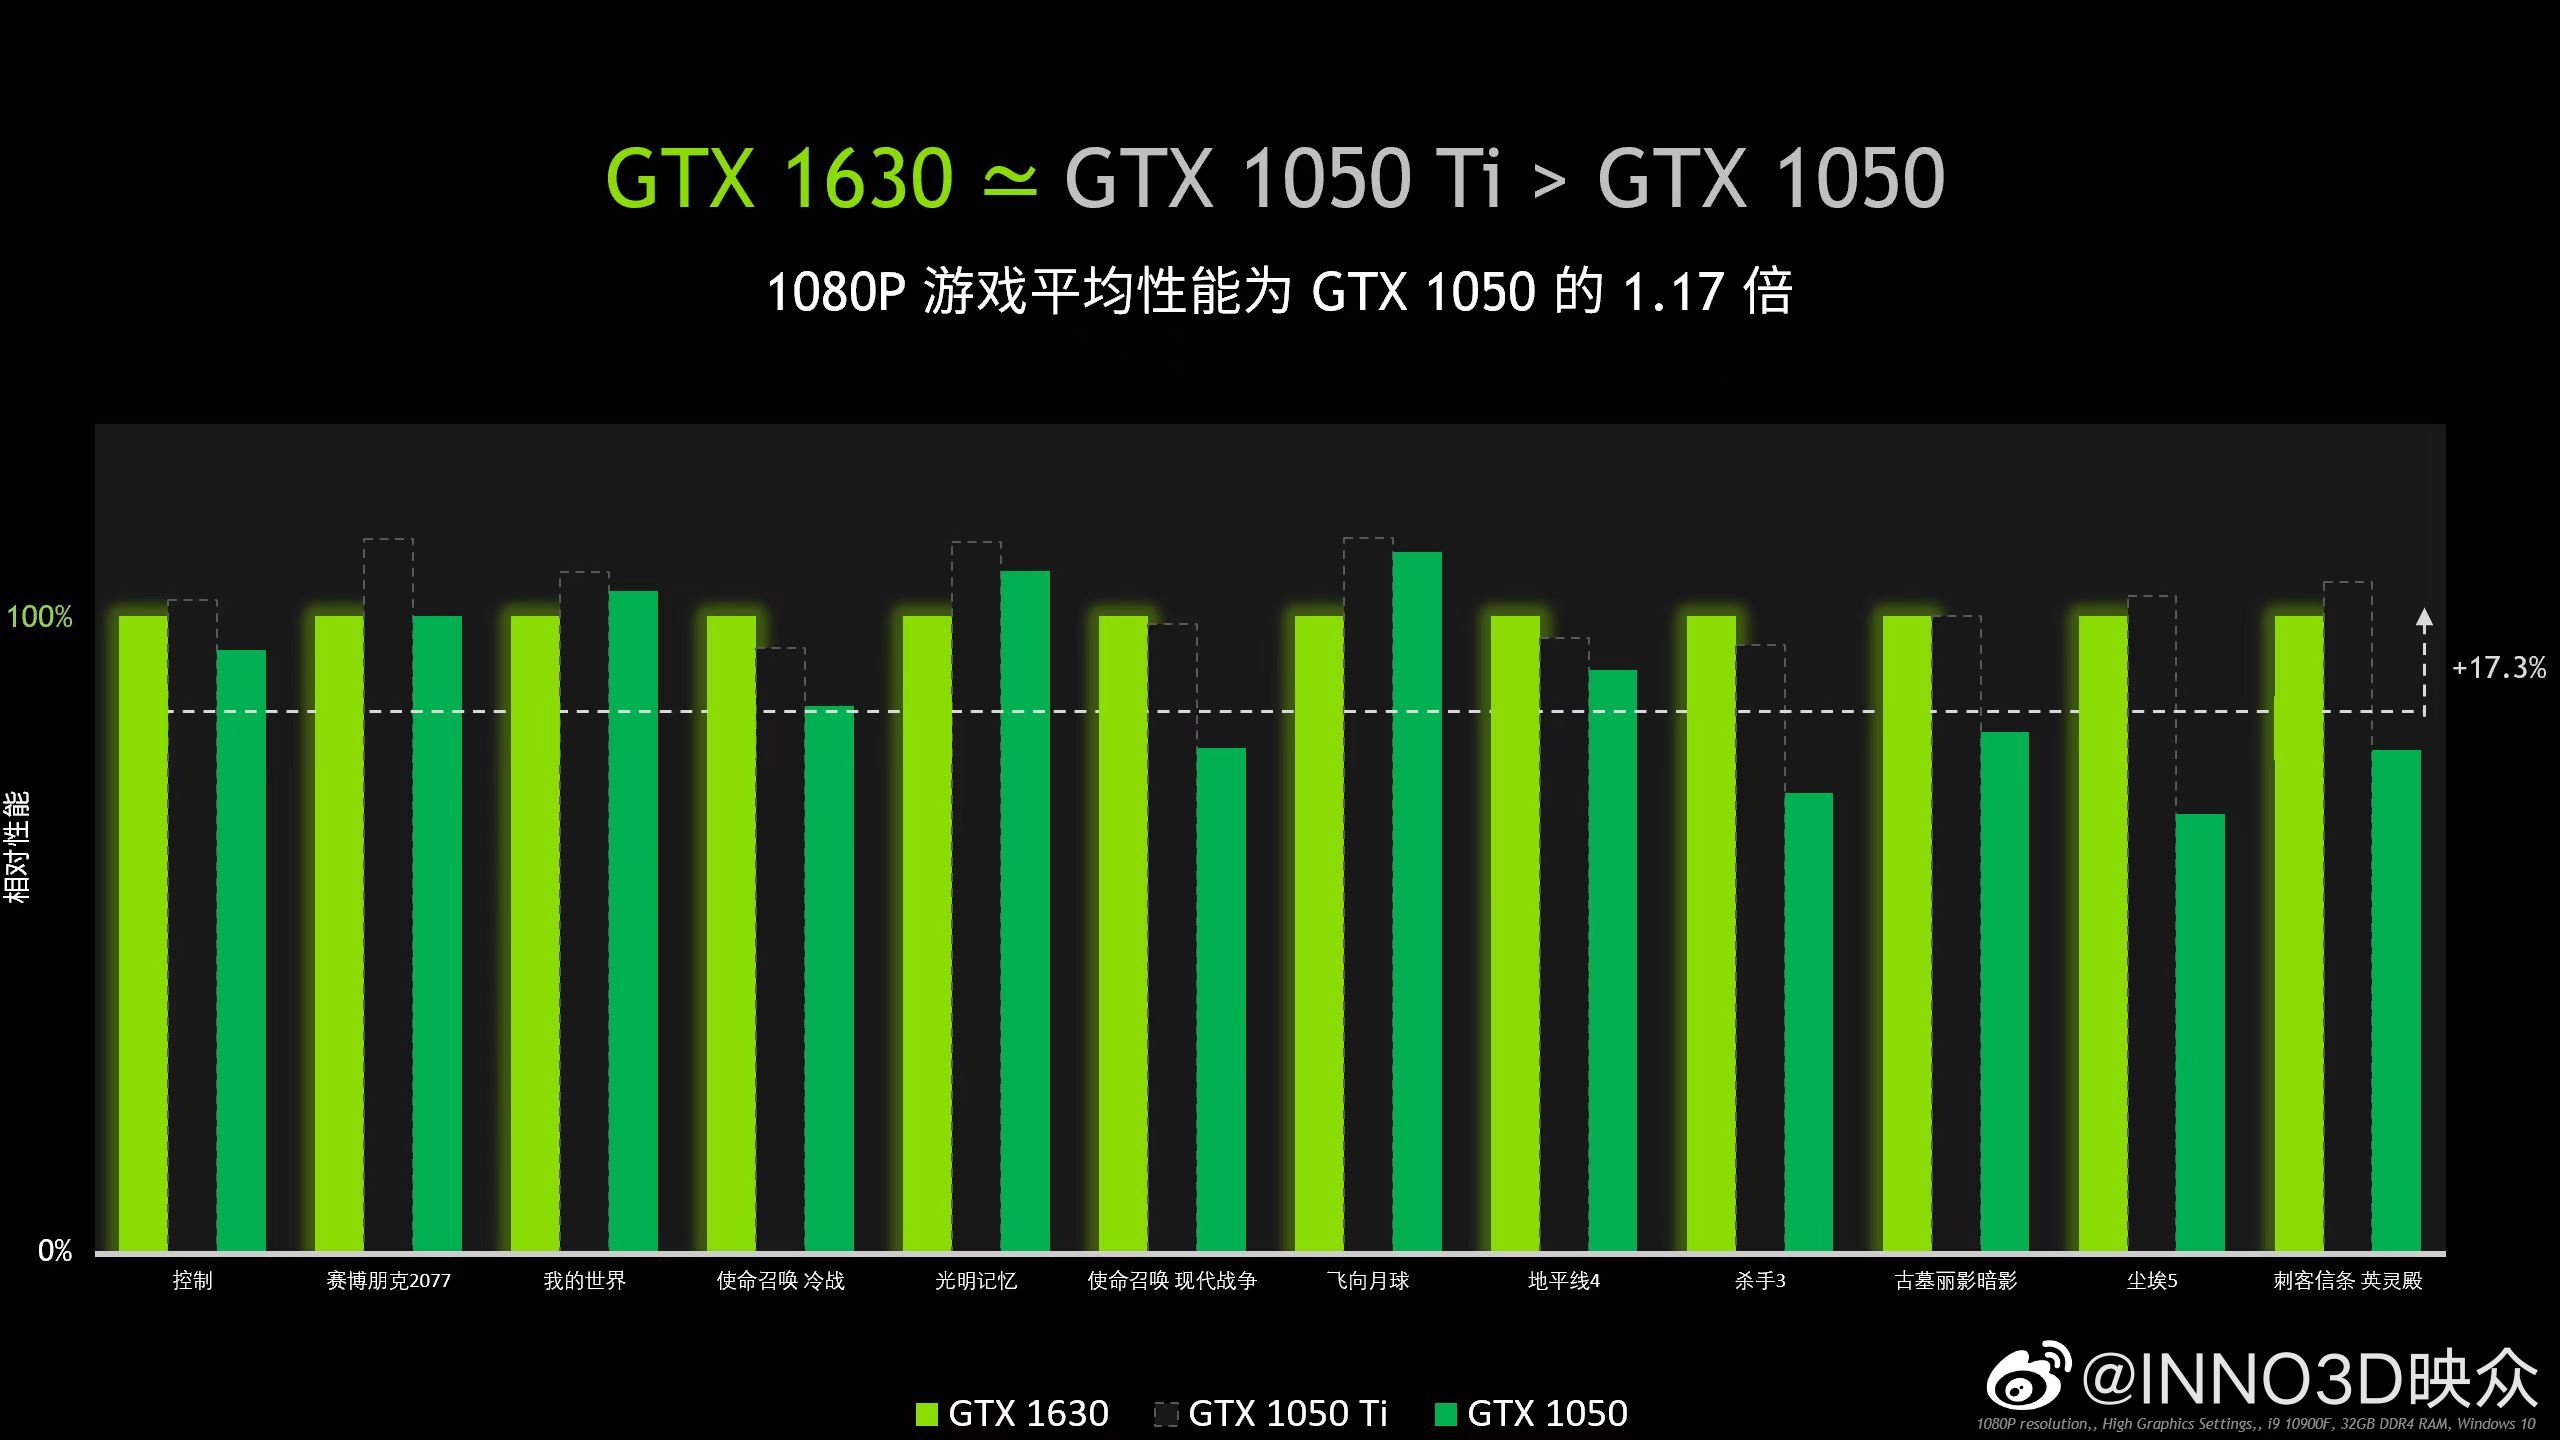 inno3d gtx 1630 1 GeForce GTX 1630 เปิดตัวที่ราคา 169ดอลล่าสหรัฐฯ ประสิทธิภาพใกล้เคียงกับ GTX 1050 Ti ที่วางจำหน่ายราคา 139ดอลล่าสหรับฯ ในปี 2016